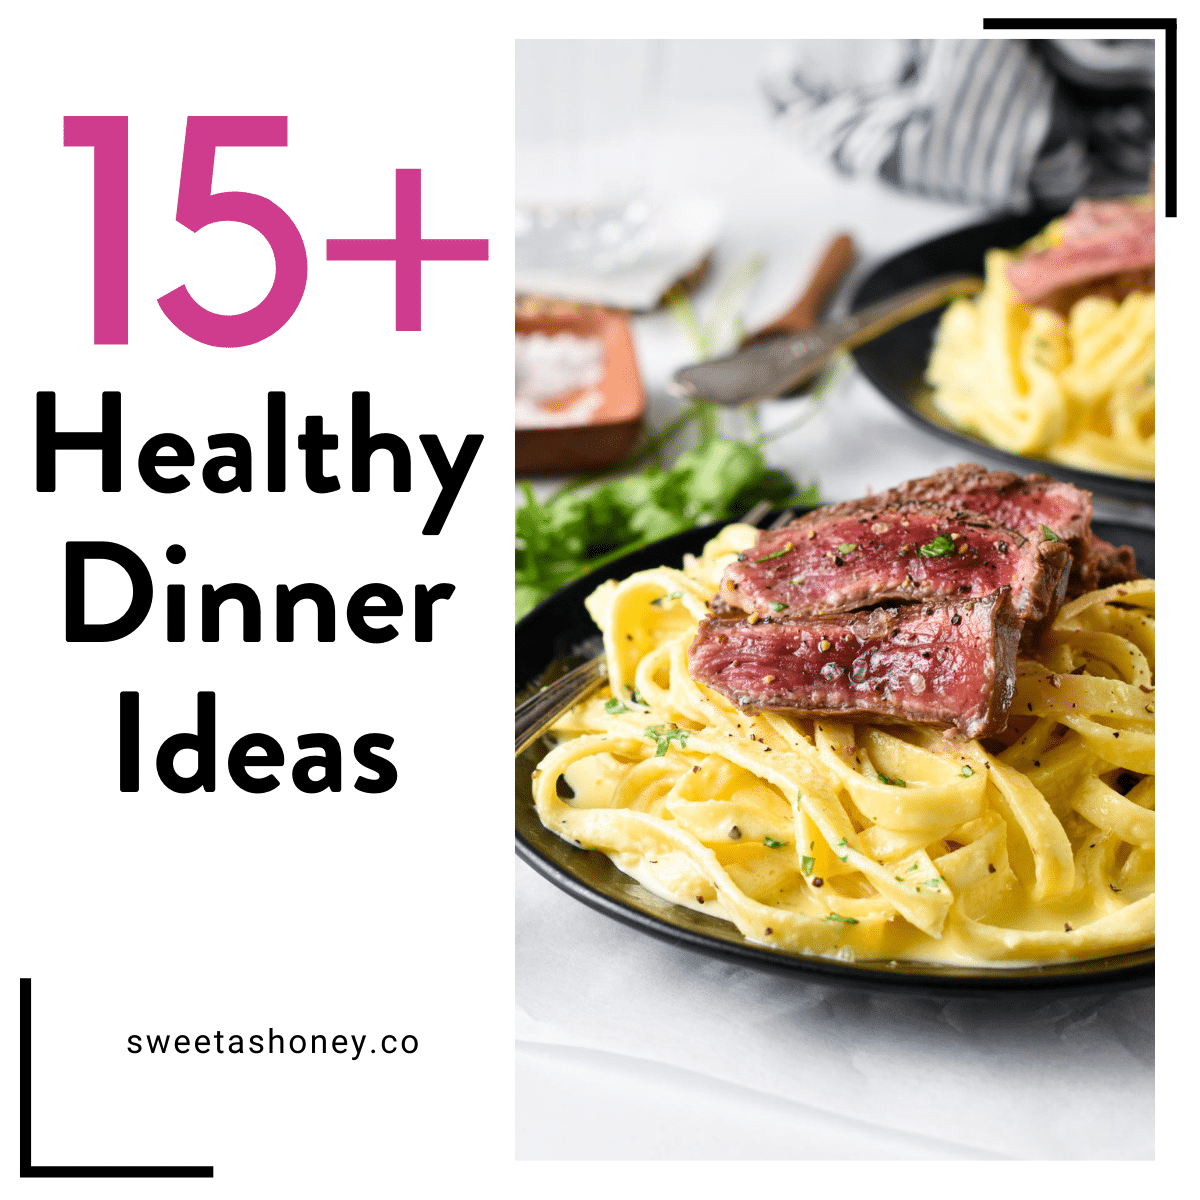 https://www.sweetashoney.co/wp-content/uploads/15-Healthy-Dinner-Ideas.png